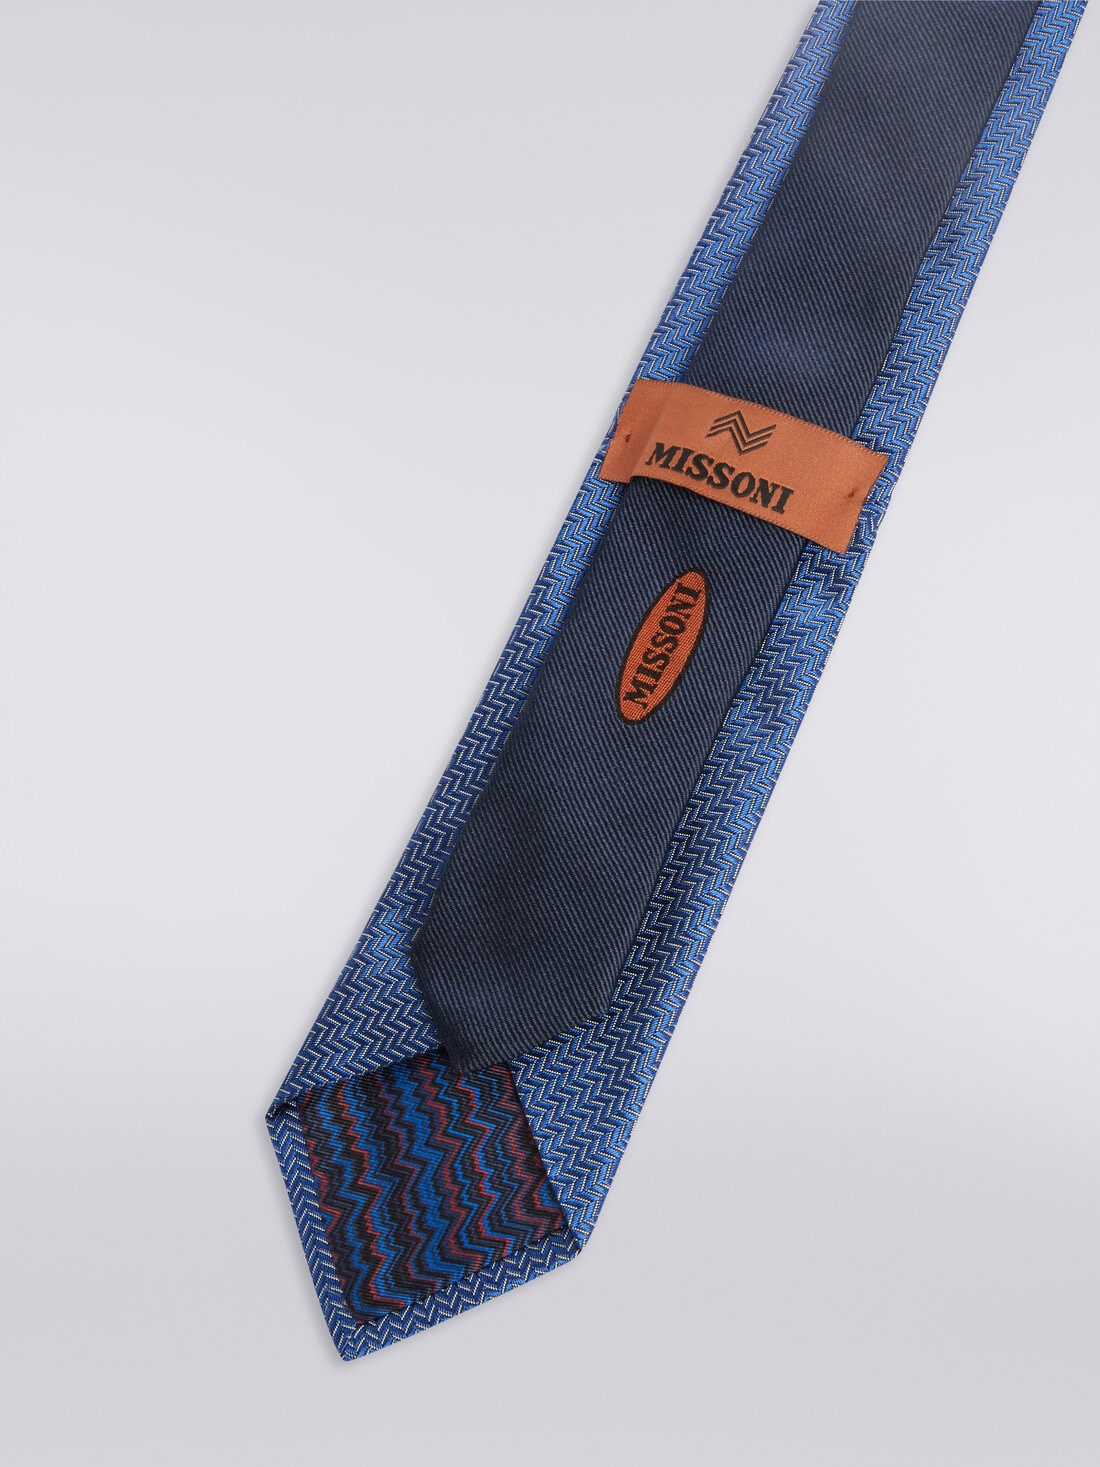 Cravatta in seta, Multicolore  - 8053147023342 - 2